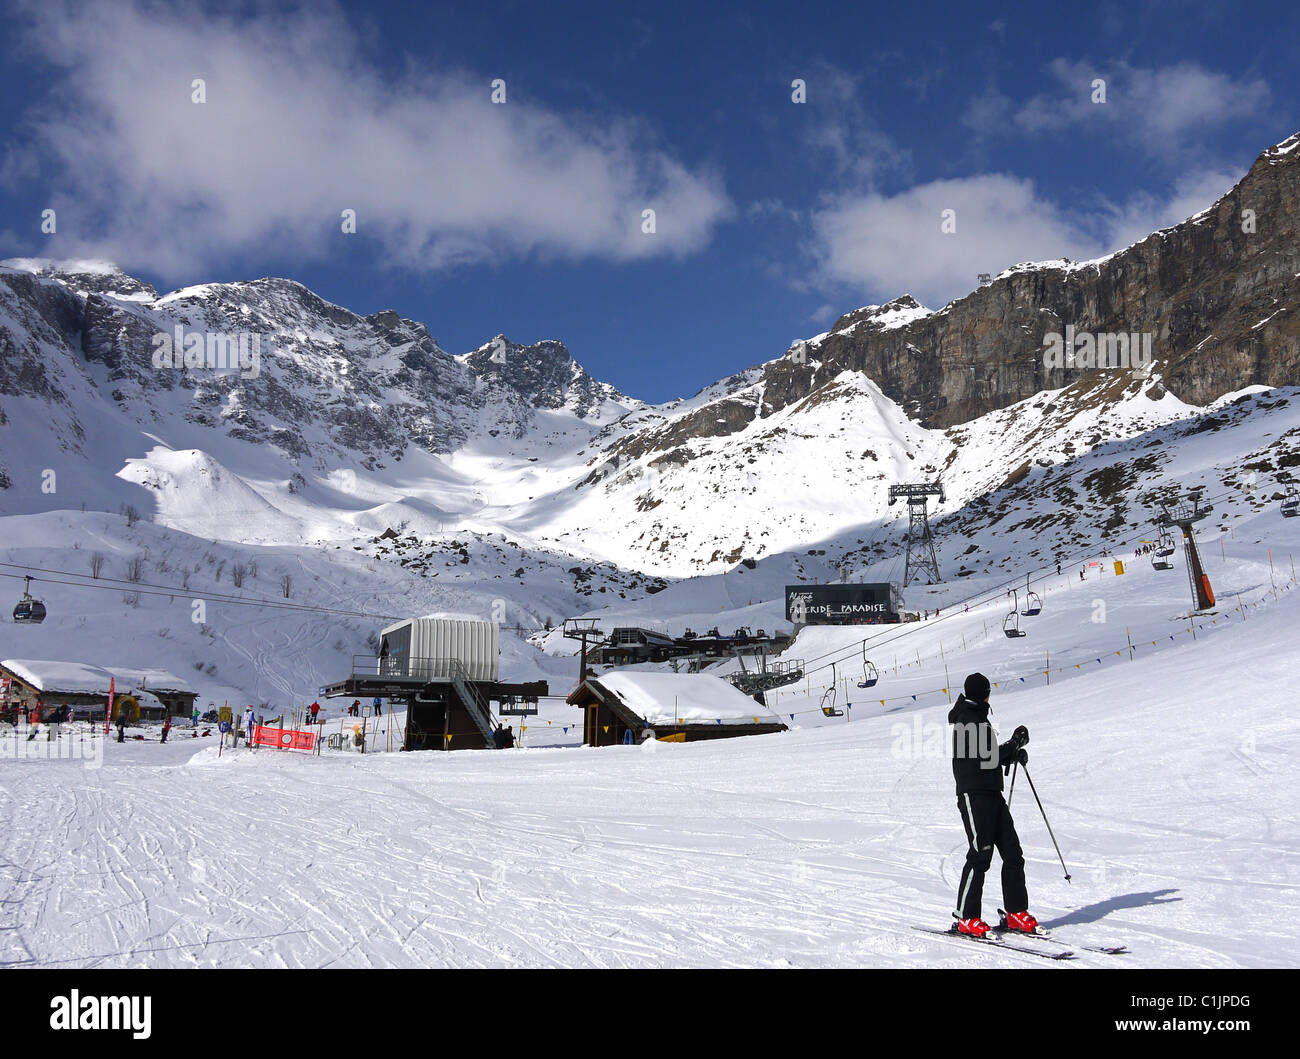 Alagna ski resort Italy Stock Photo